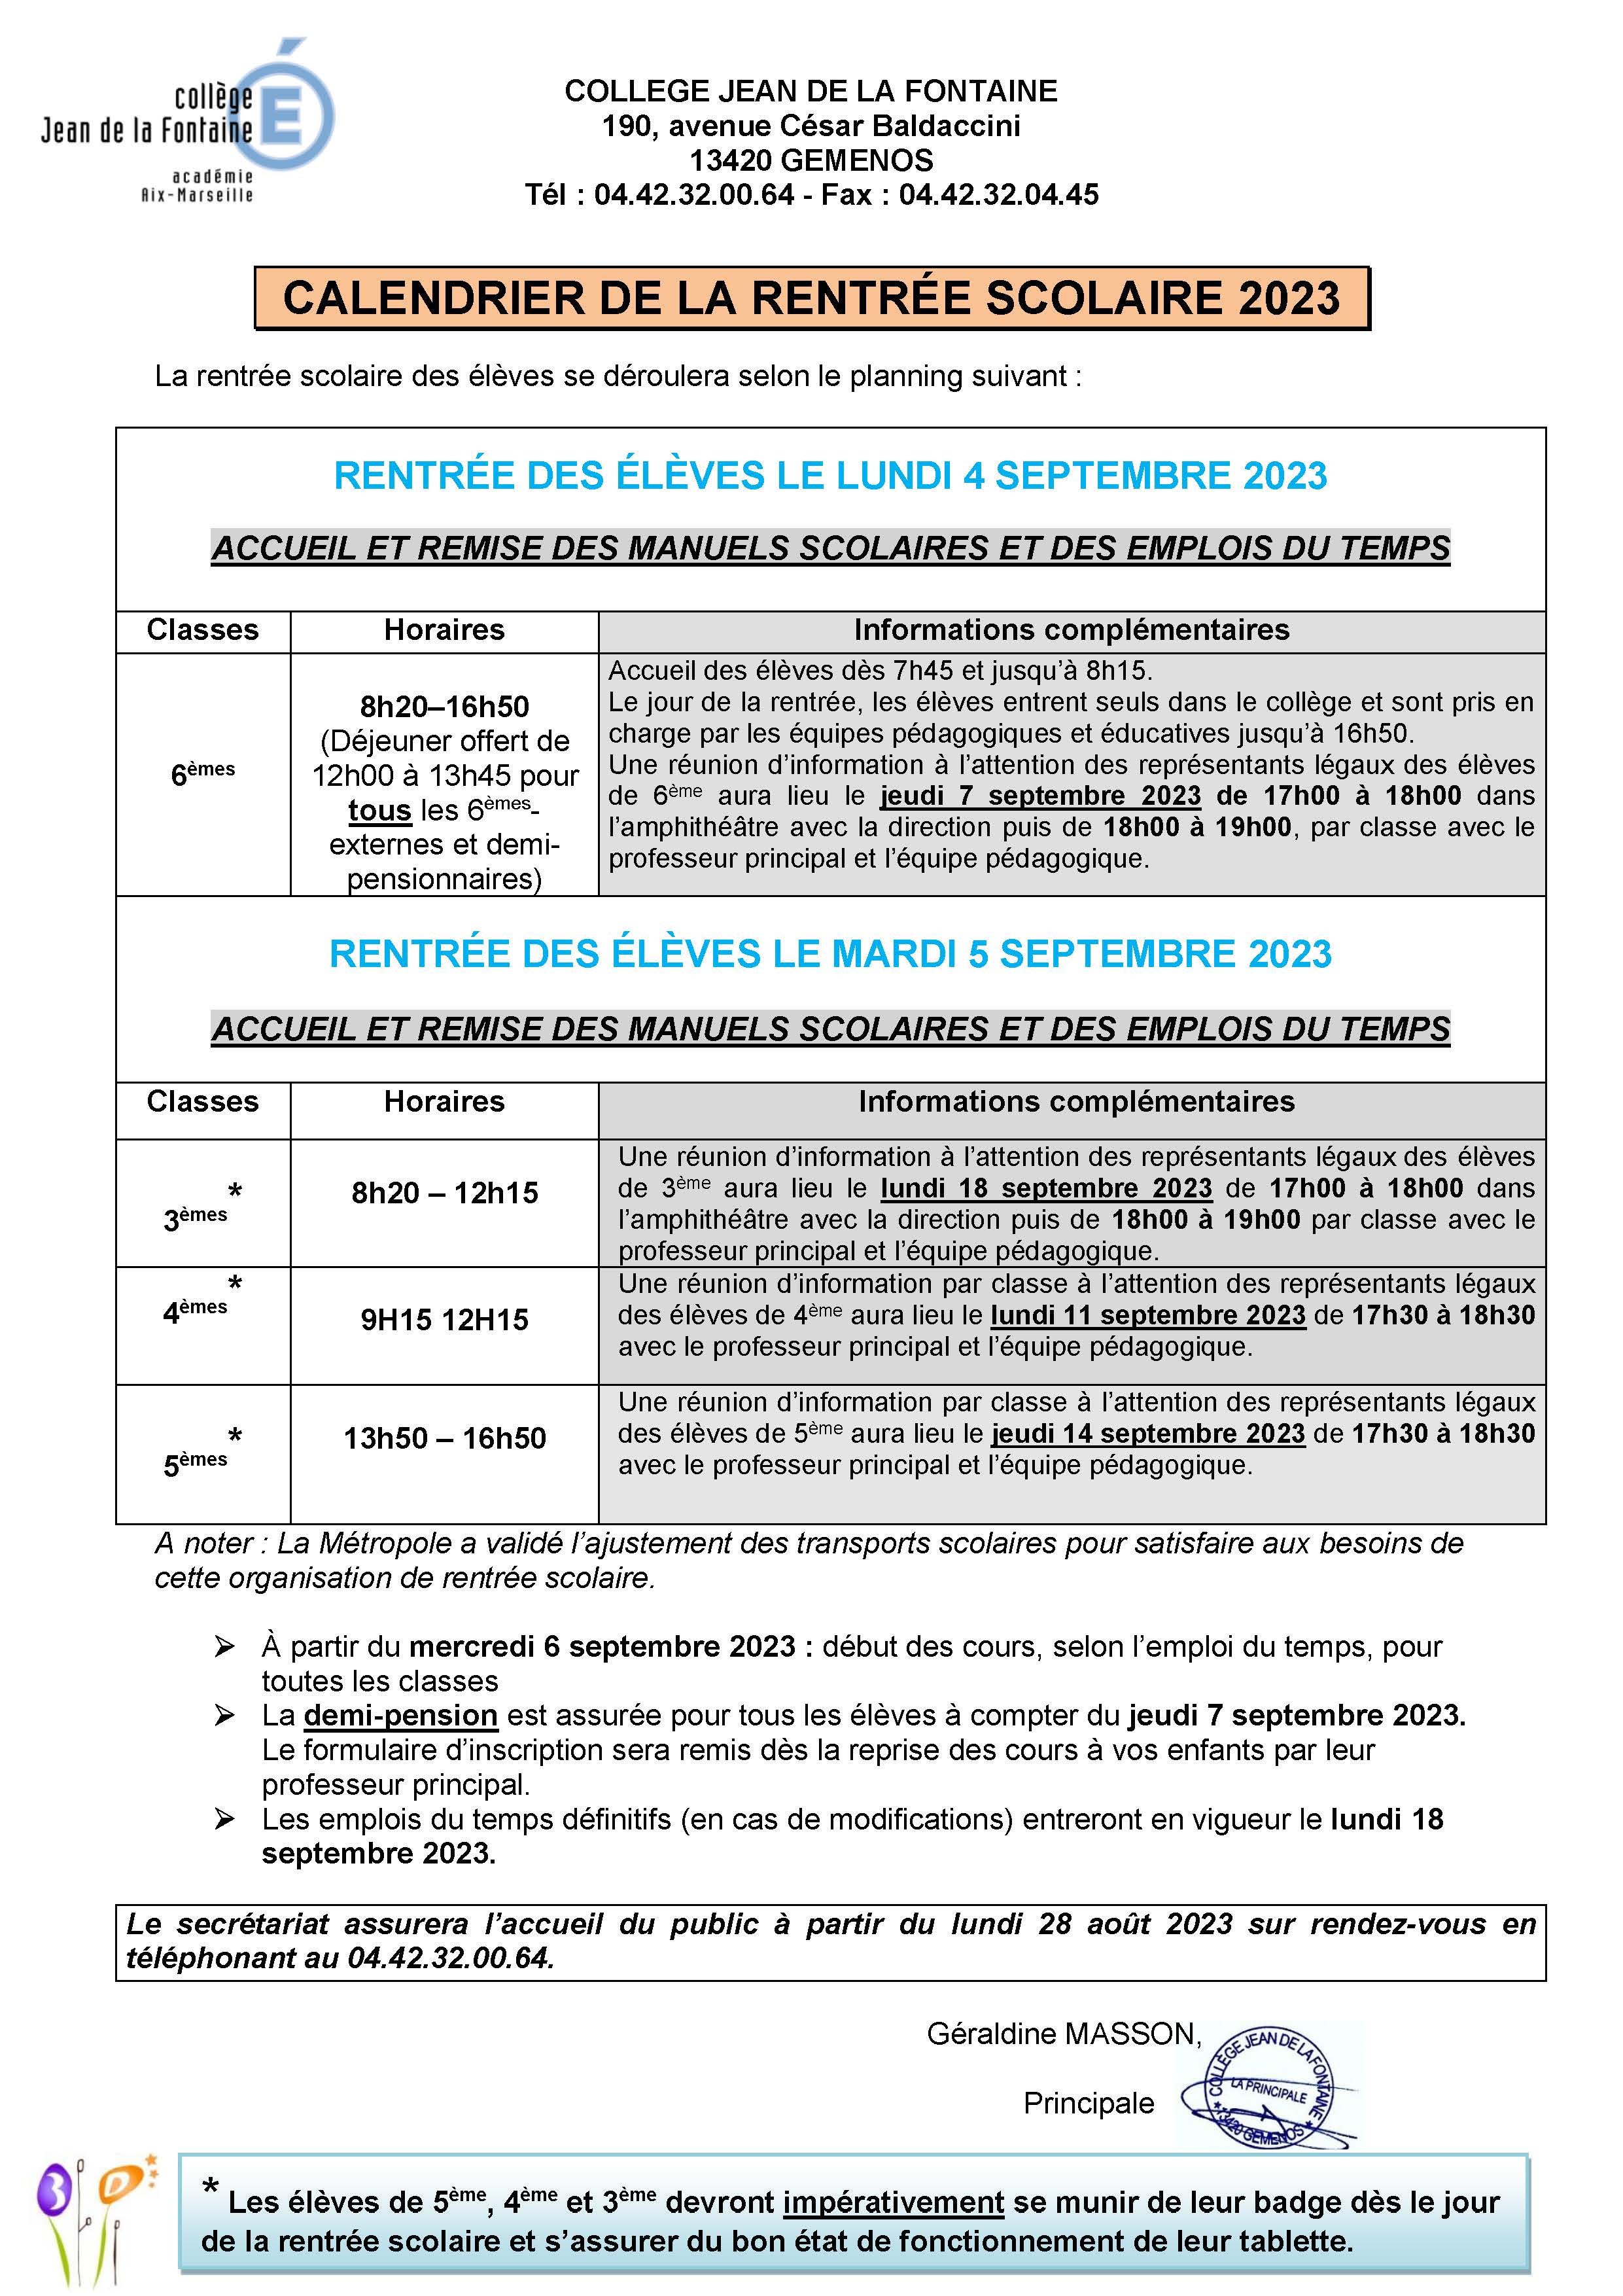 Calendrier_rentrée_scolaire_2023-2024.jpg